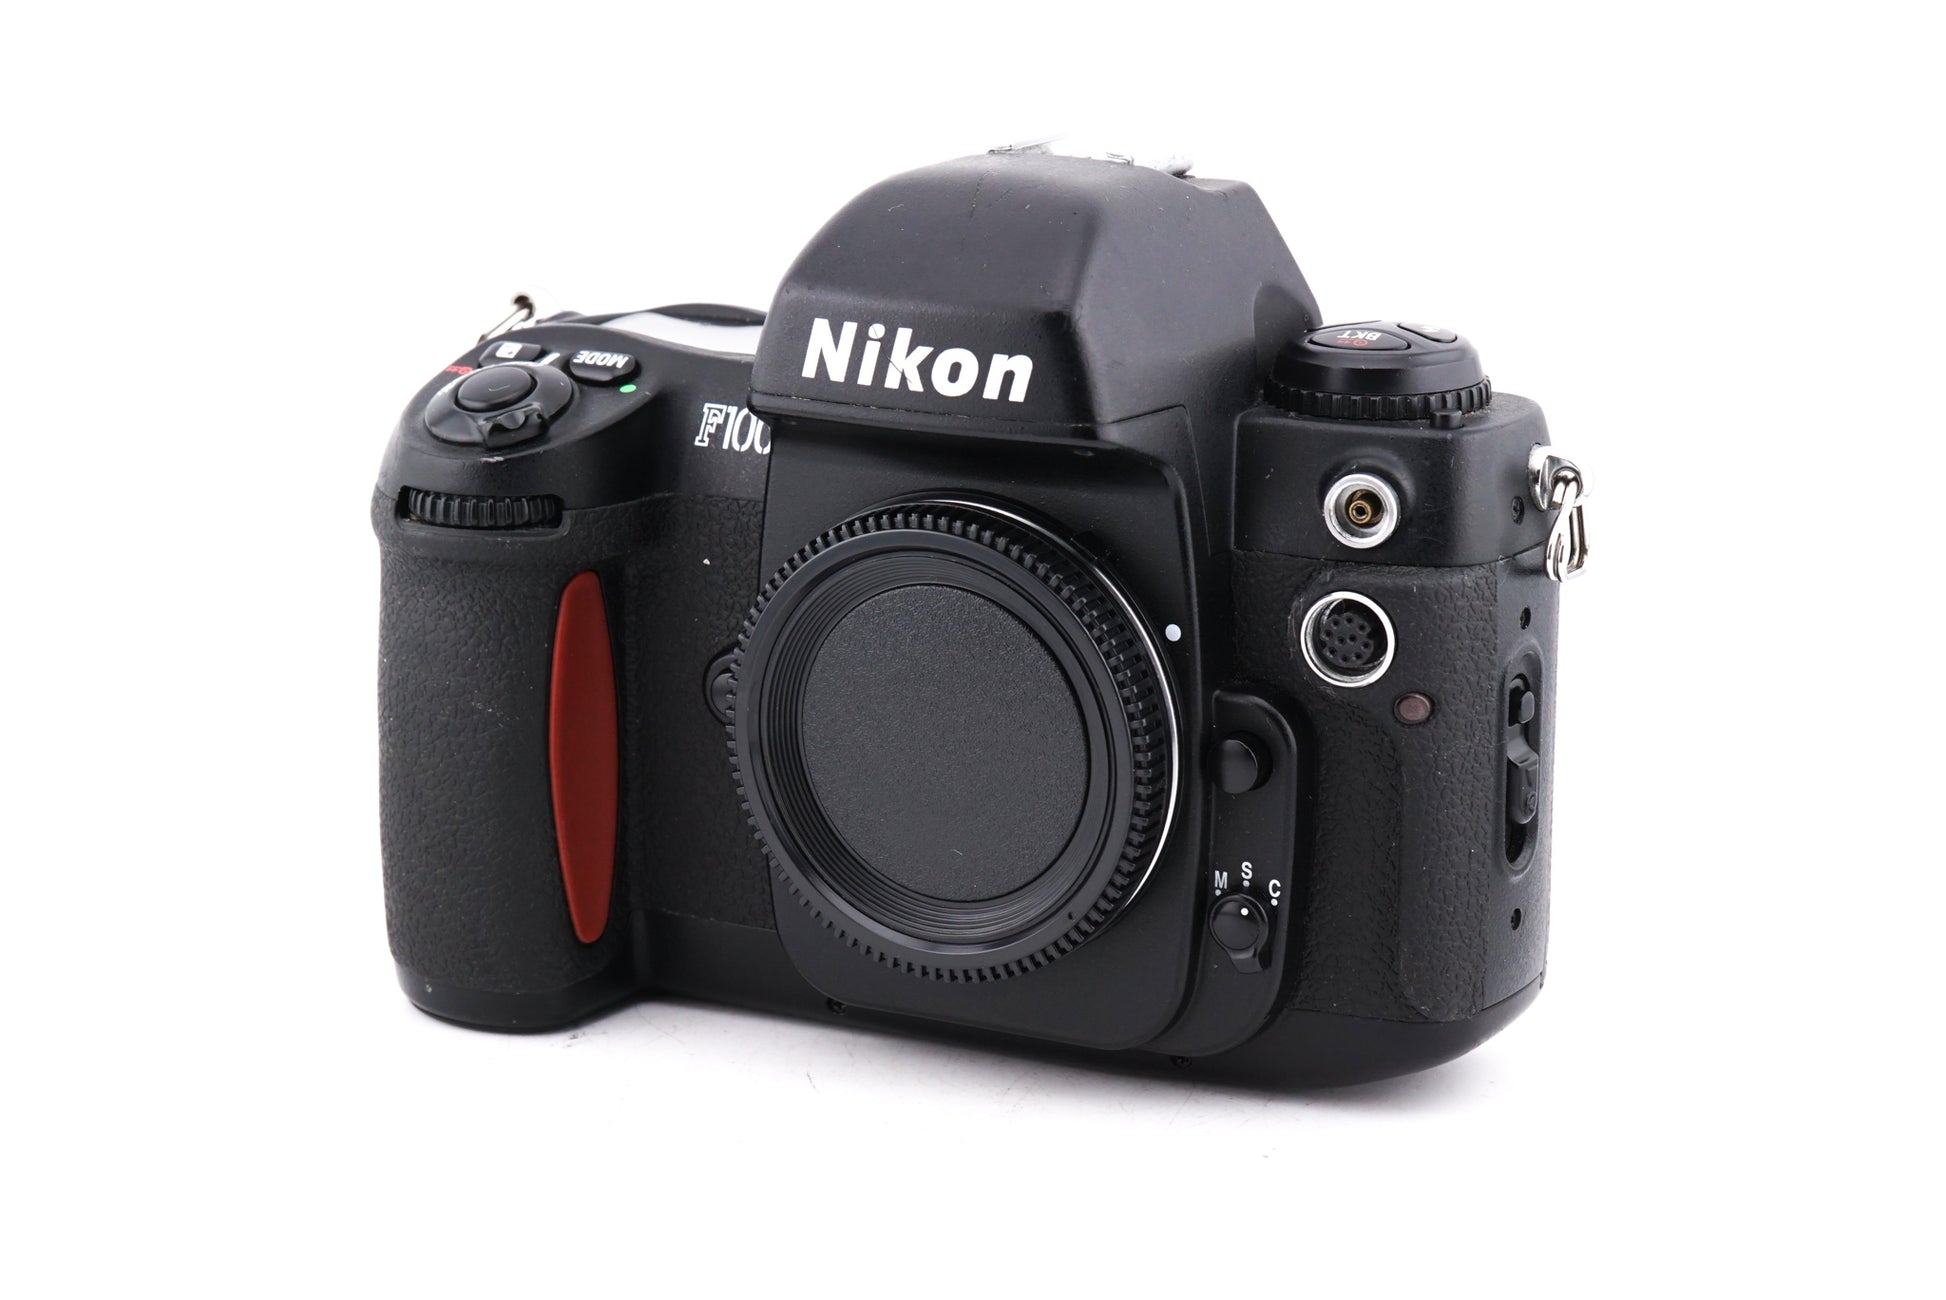 Nikon F100 Camera plate.